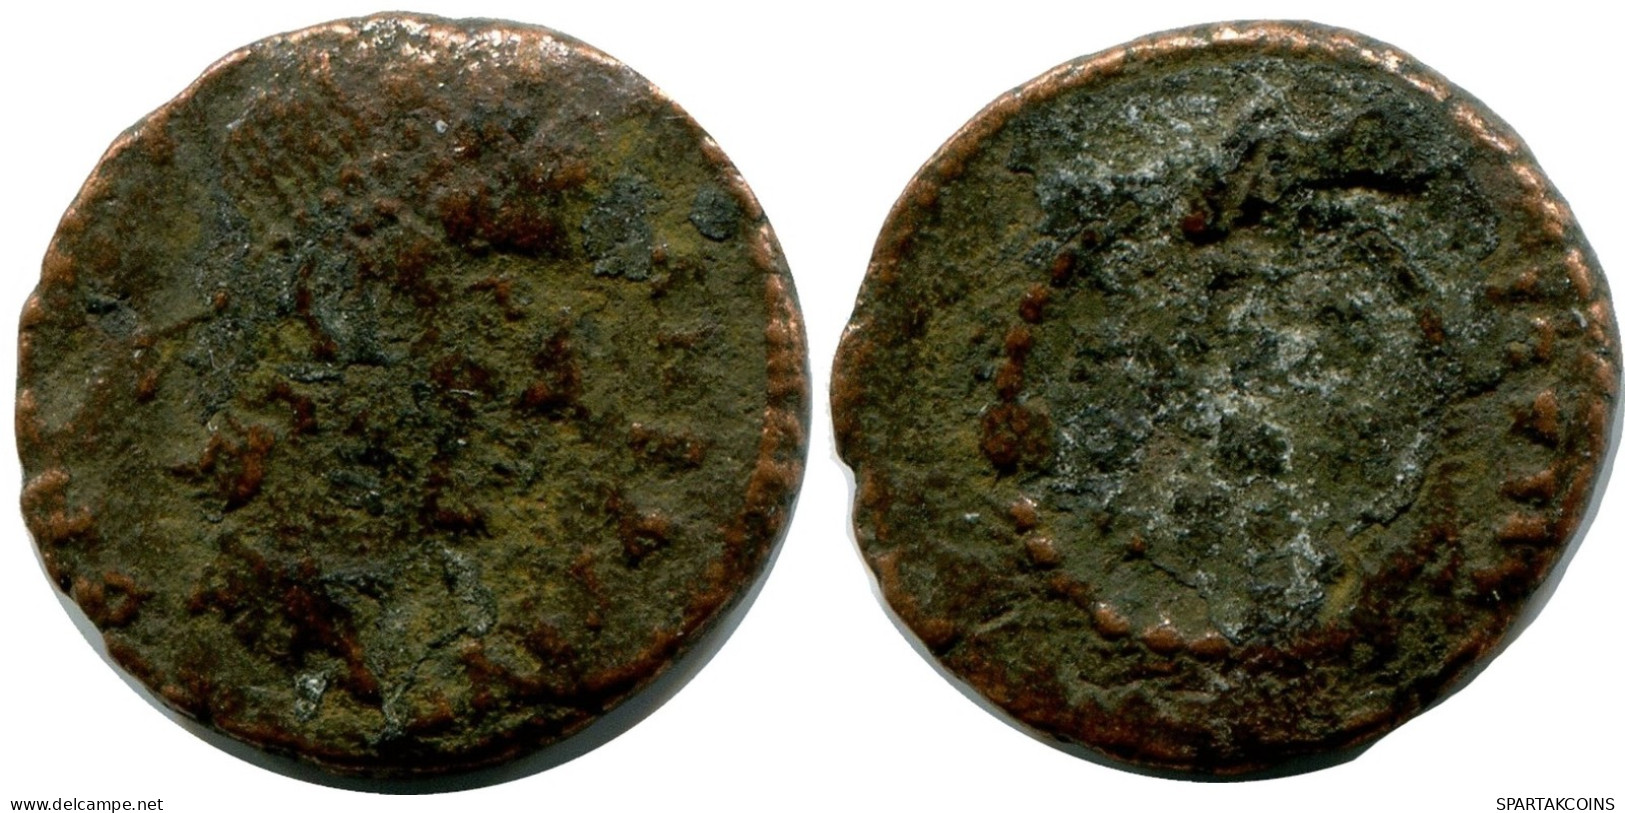 ROMAN Coin MINTED IN ALEKSANDRIA FOUND IN IHNASYAH HOARD EGYPT #ANC10156.14.D.A - L'Empire Chrétien (307 à 363)